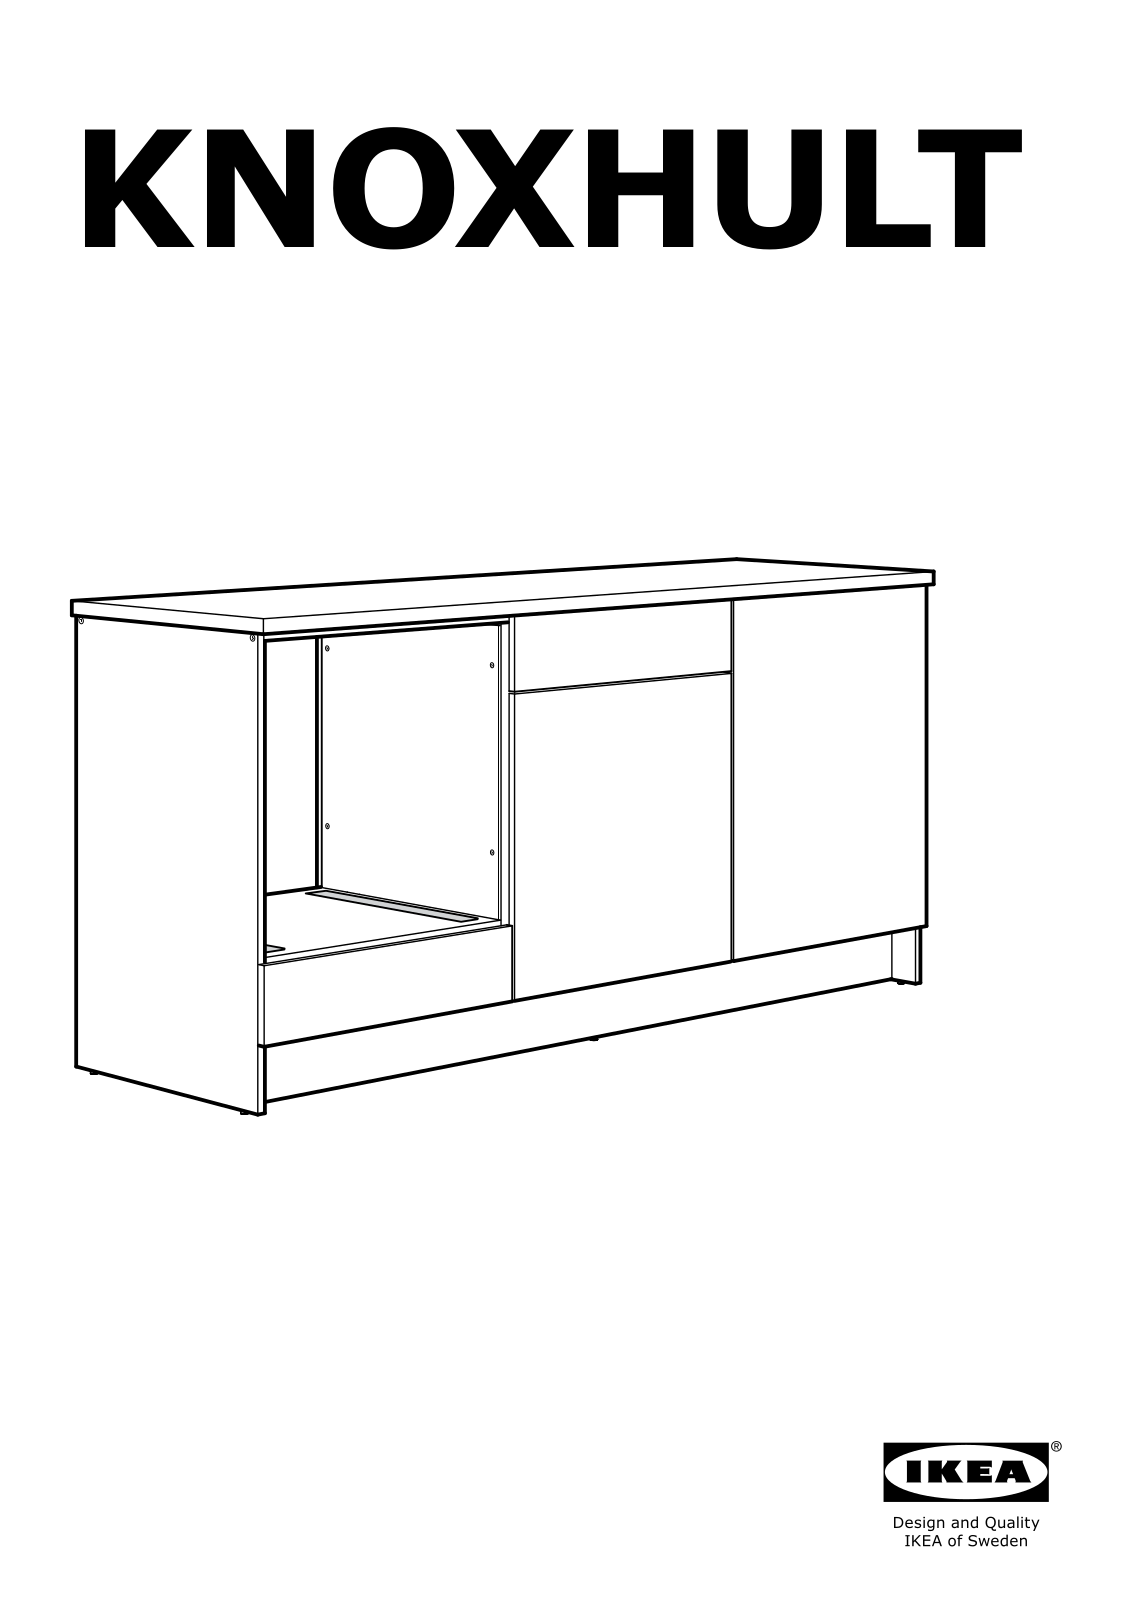 IKEA KNOXHULT User Manual